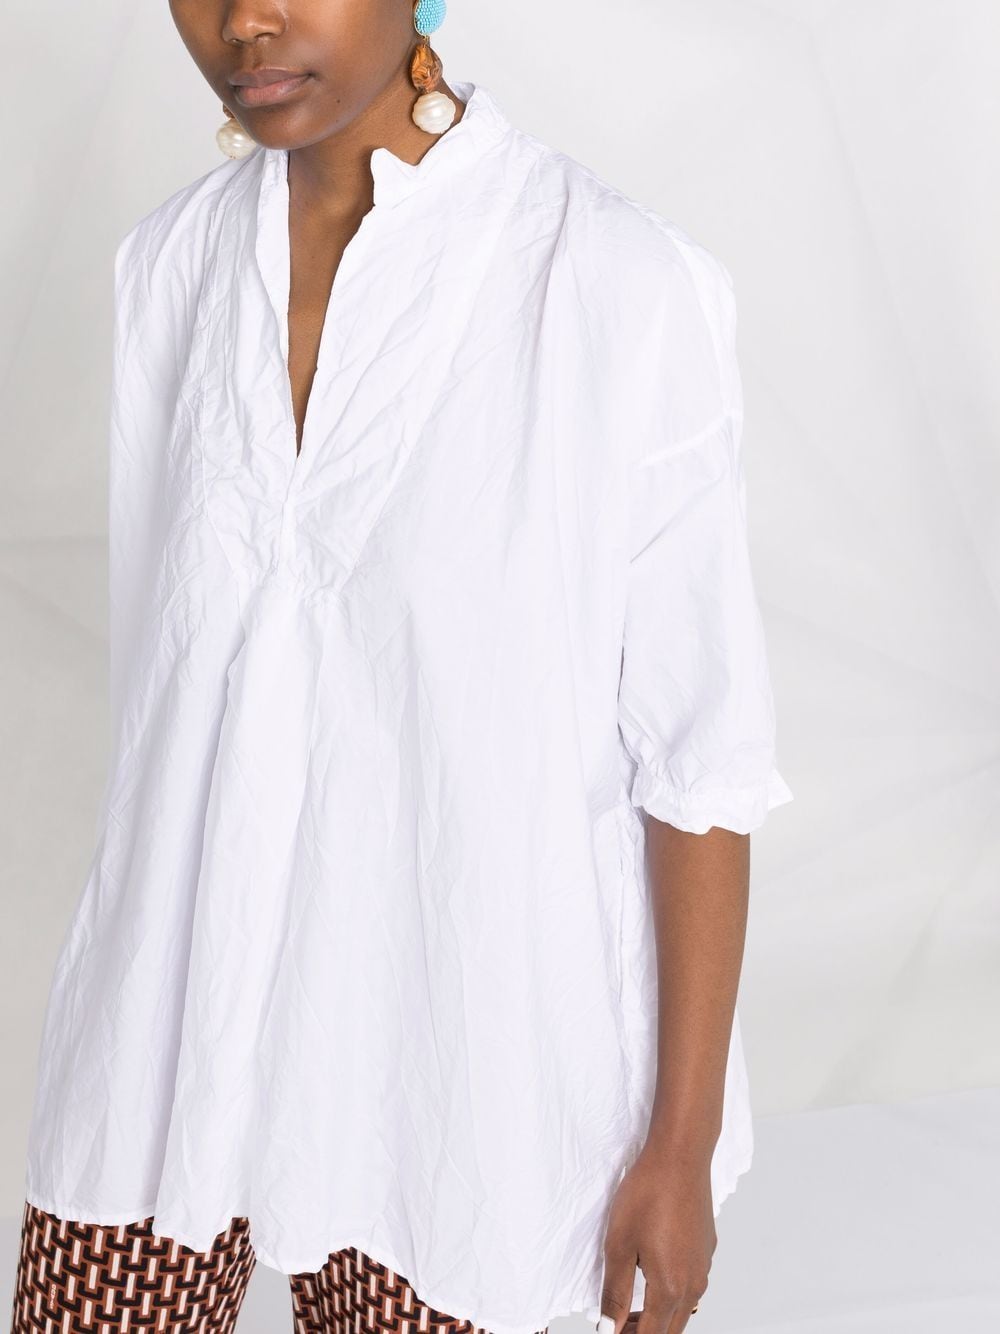 Classic White Cotton Shirt for Women by Daniela Gregis